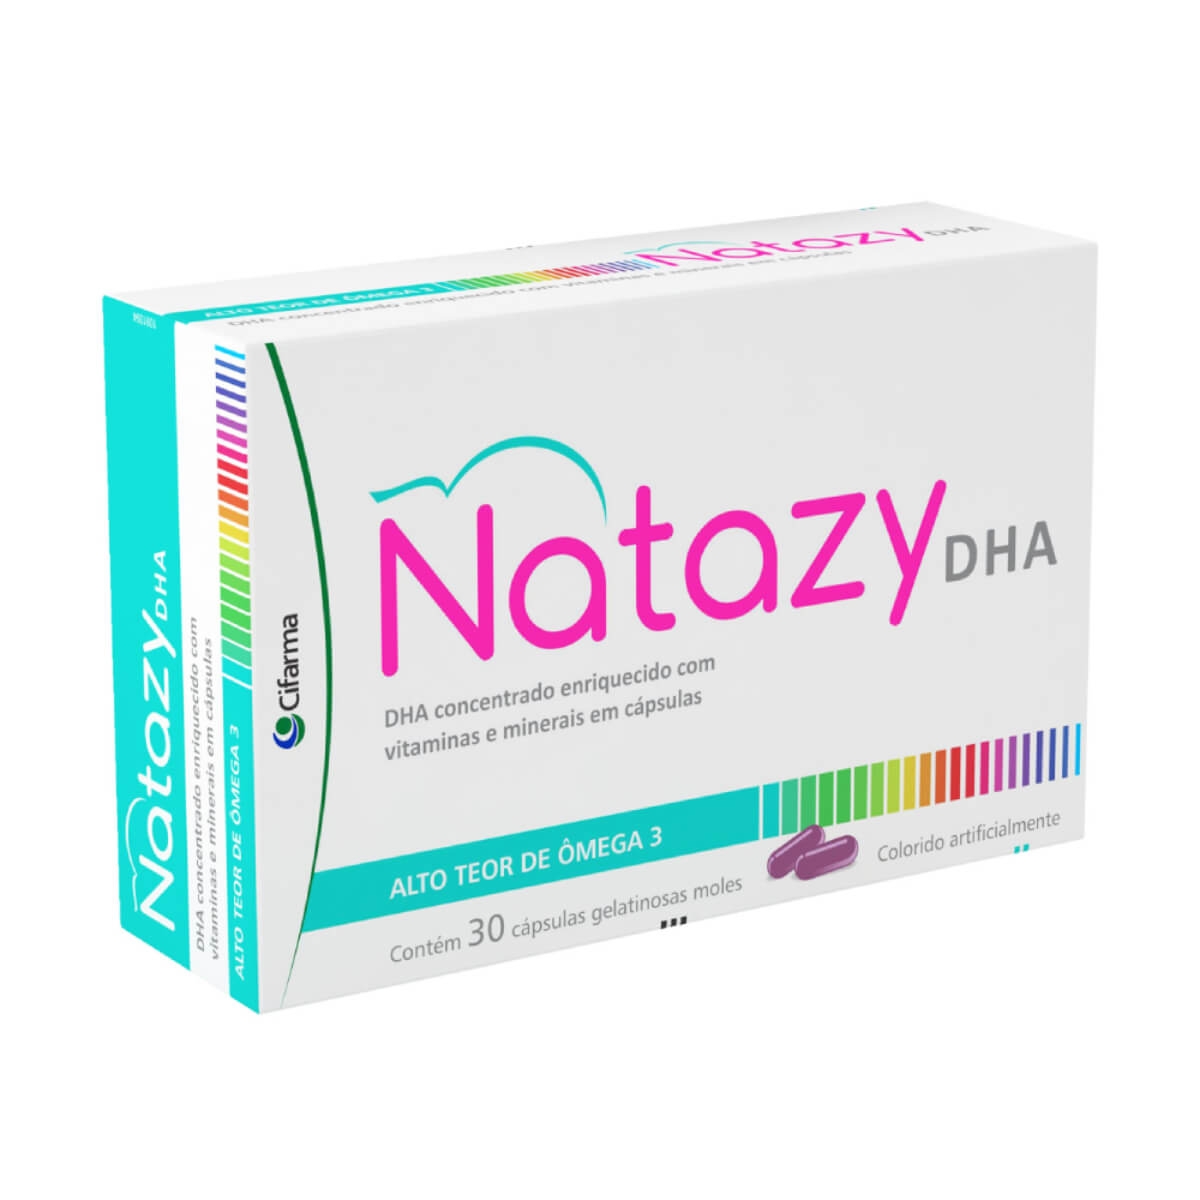 Suplemento Vitaminico Natazy DHA 30 Cápsulas Gelatinosas Moles